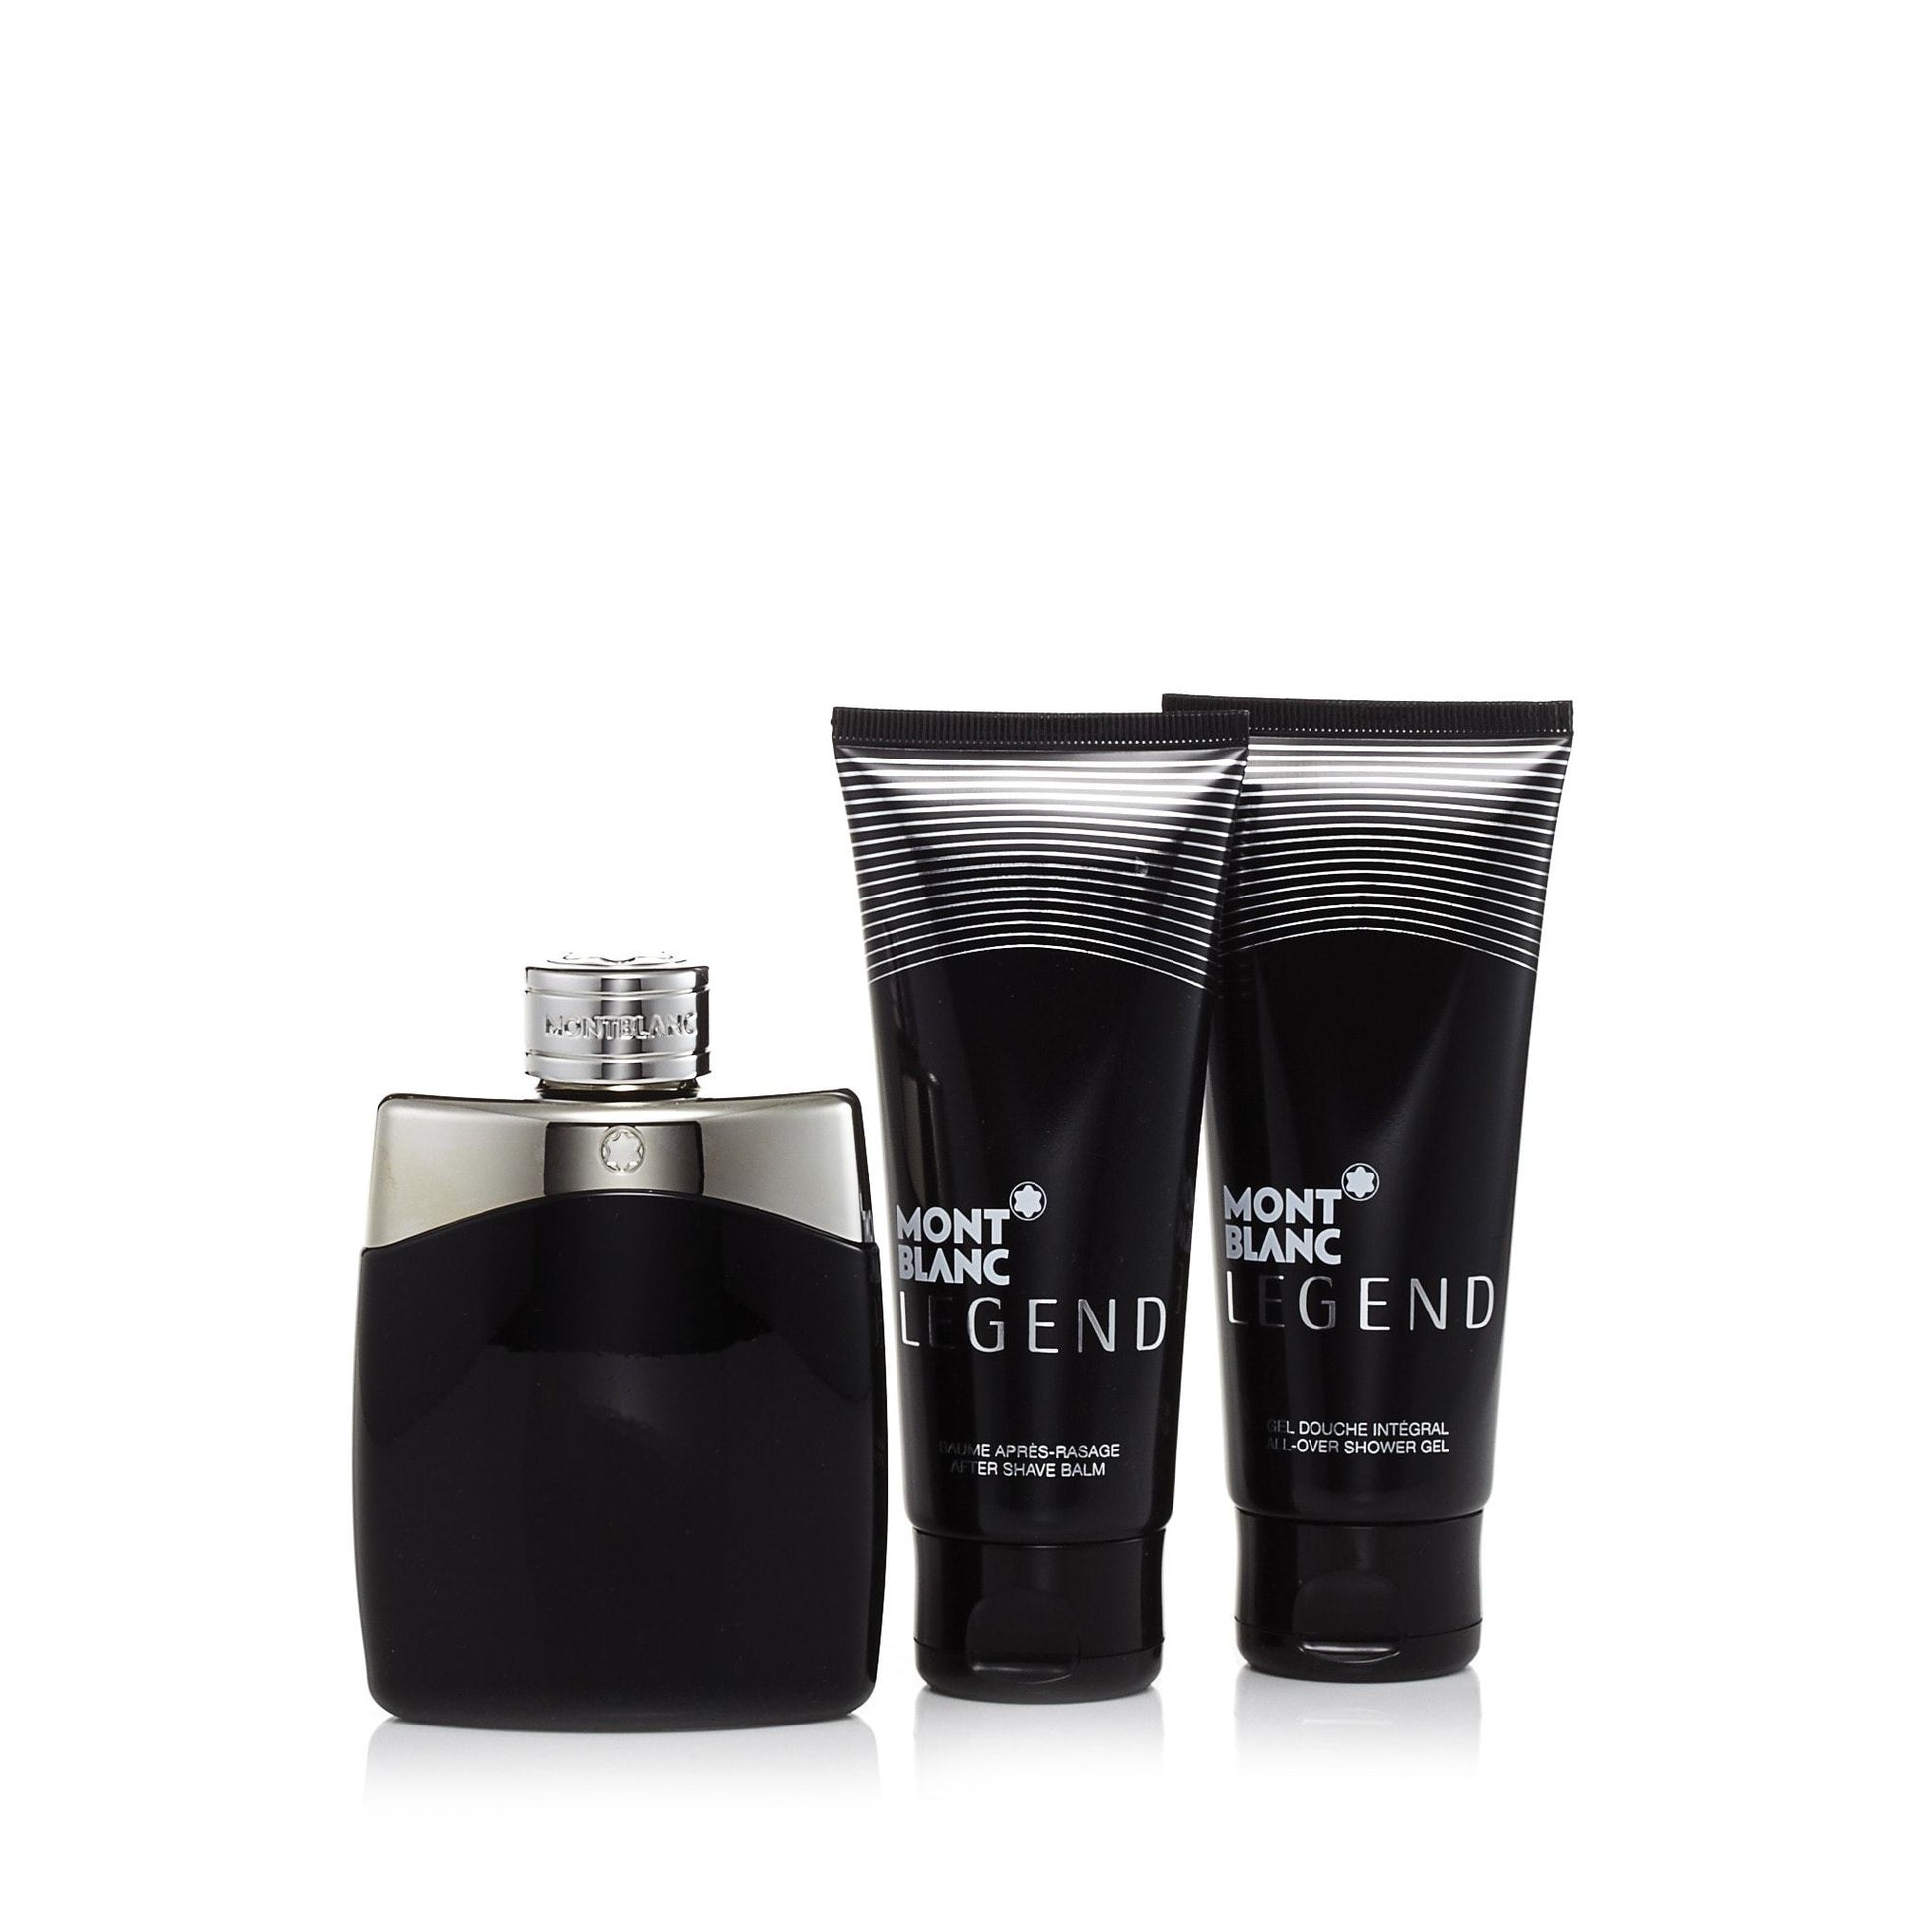 Legend Gift Set Eau de Toilette, After Shave and Shower Gel for Men by Montblanc, Product image 1